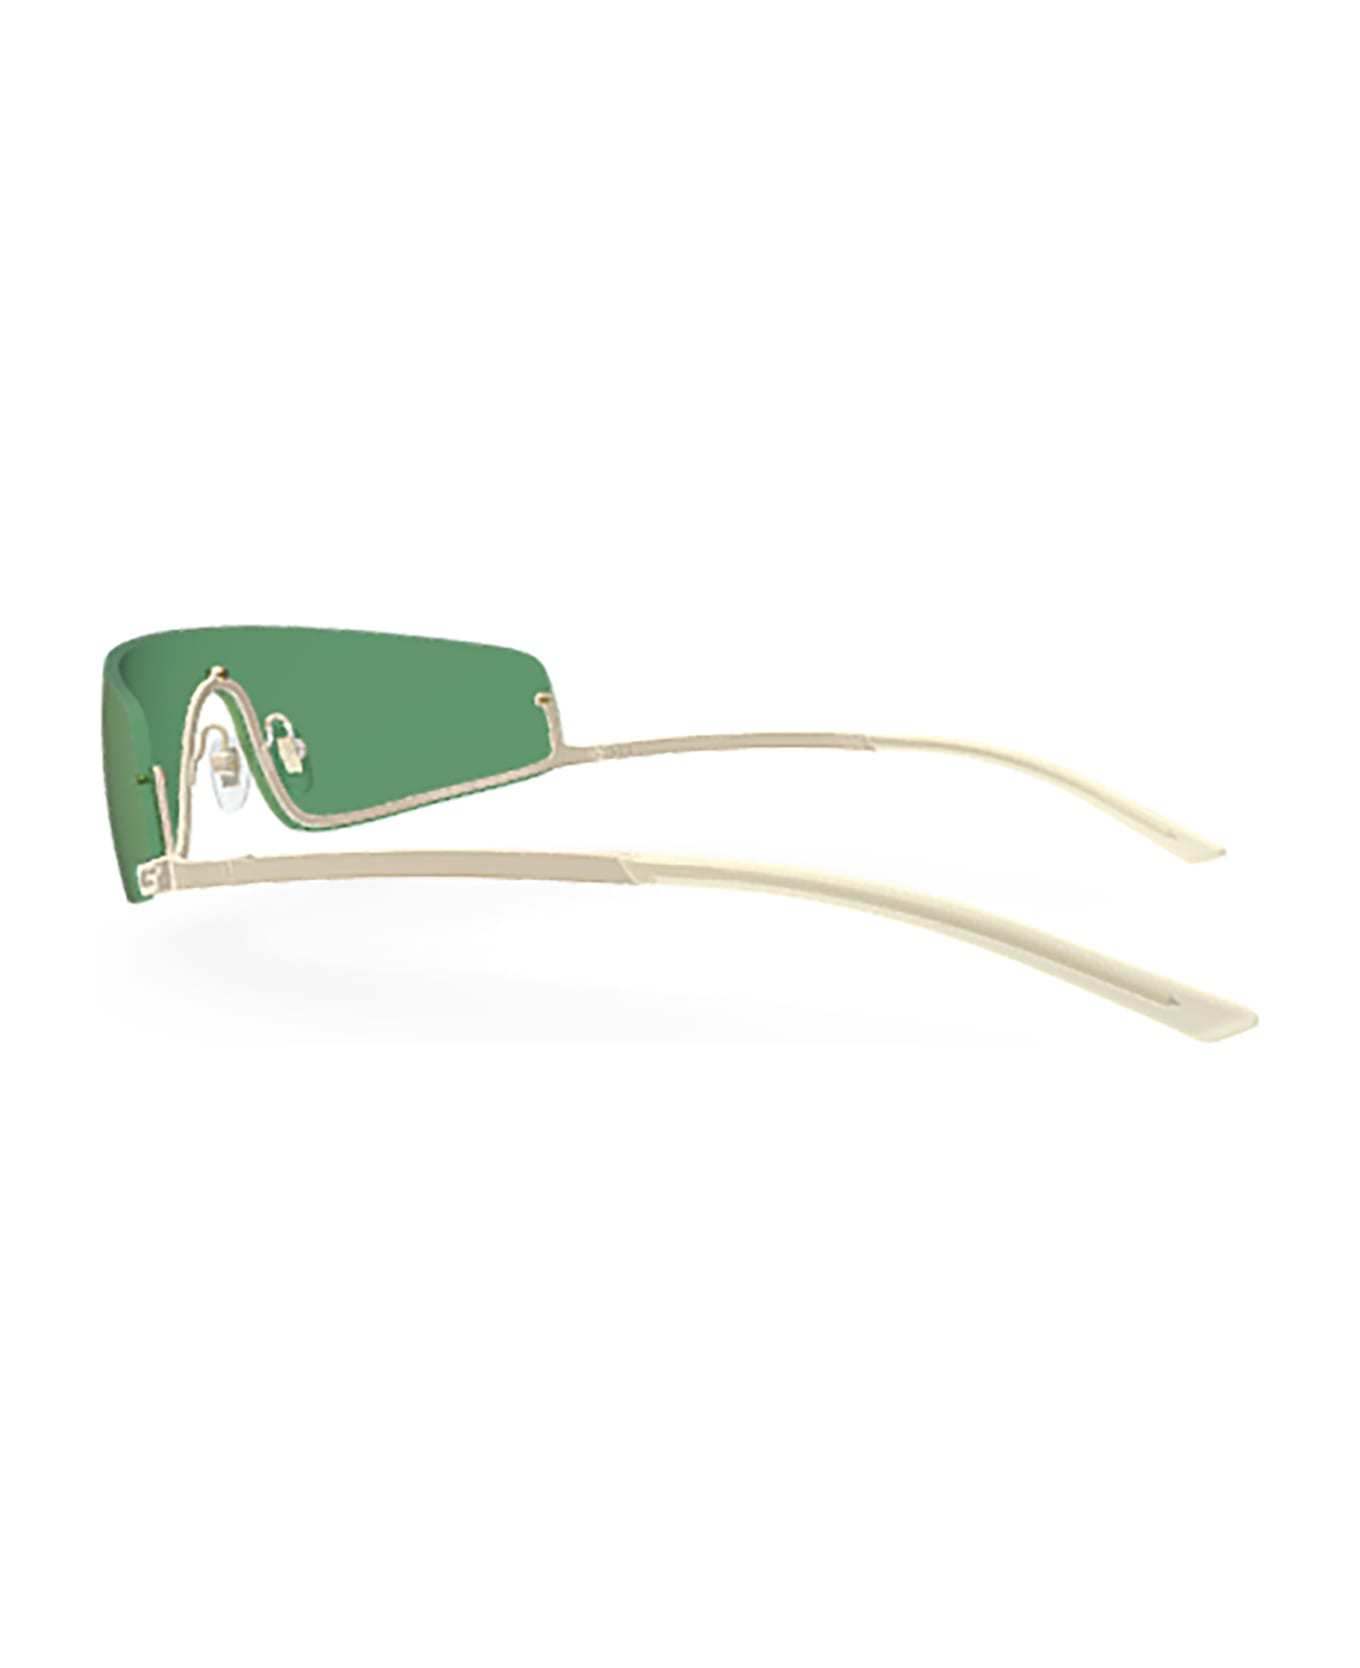 Gucci Eyewear GG1561S Sunglasses - Ivory Ivory Green